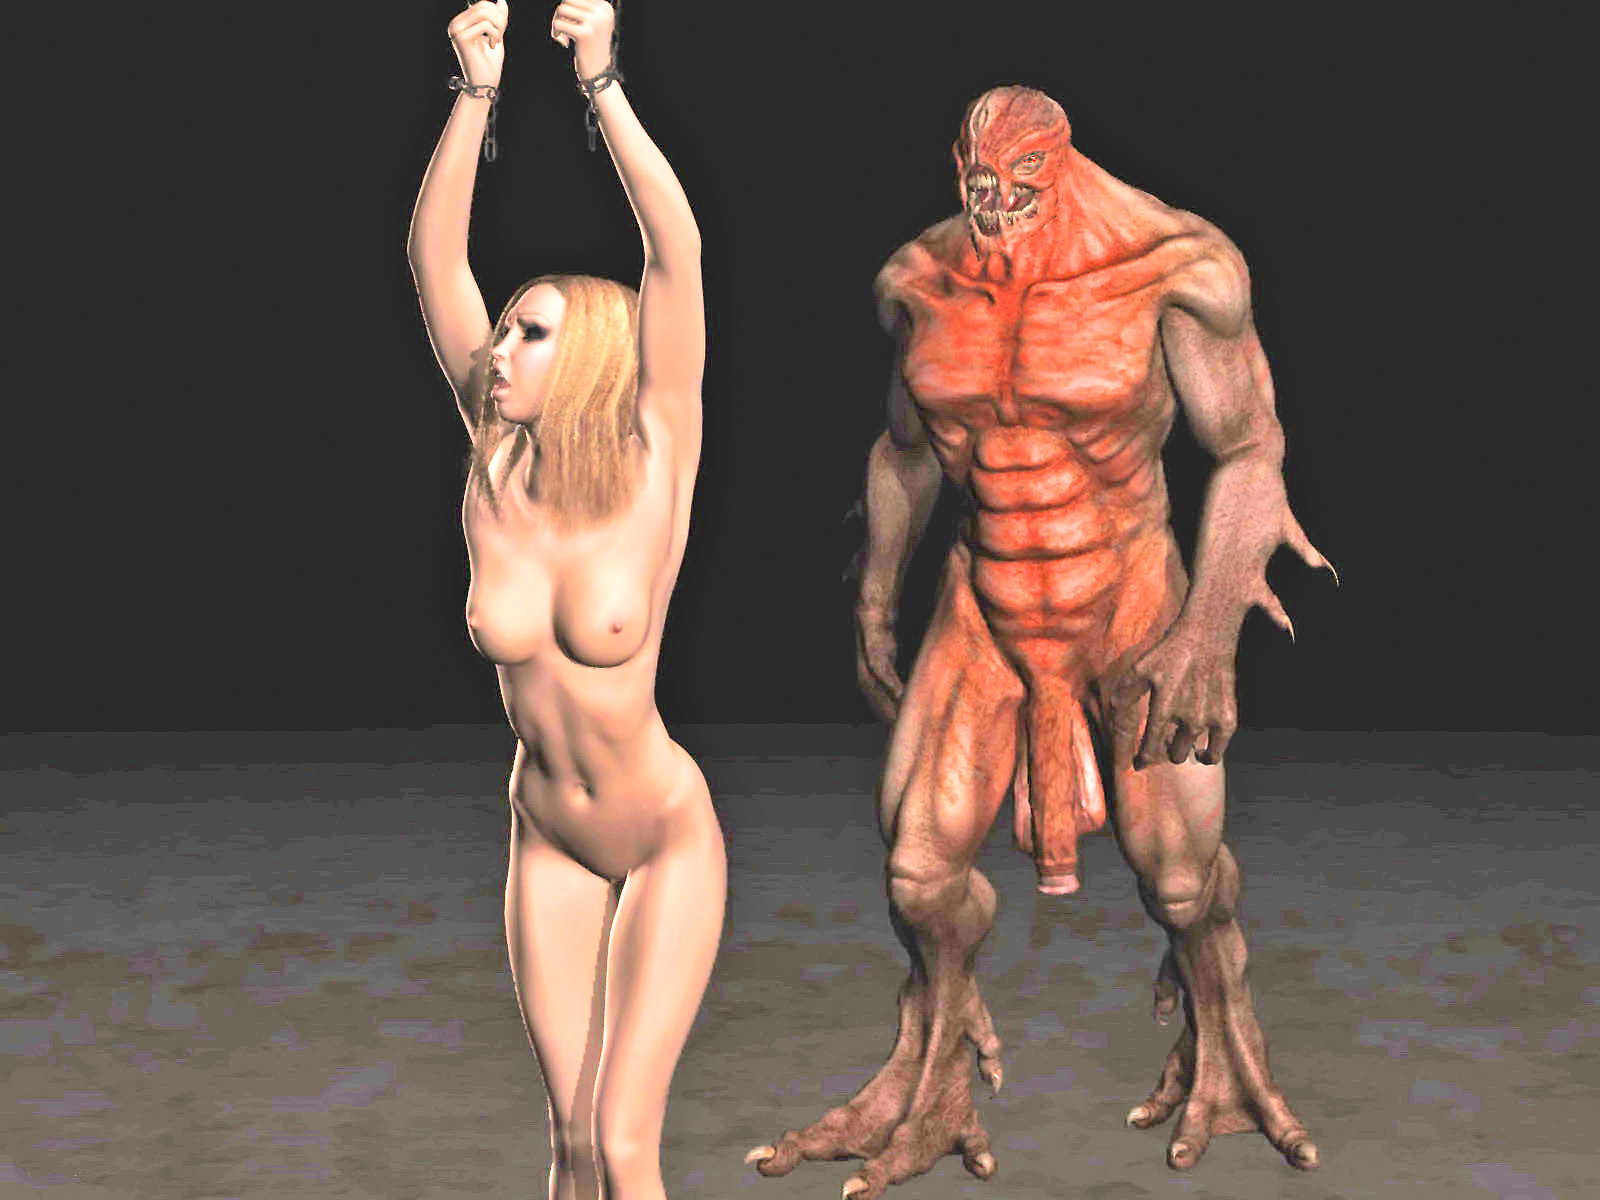 3d Monster Porn Animated Art - Demons and ogres ravaging babes - erotic 3d art monster at  Hd3dMonsterSex.com